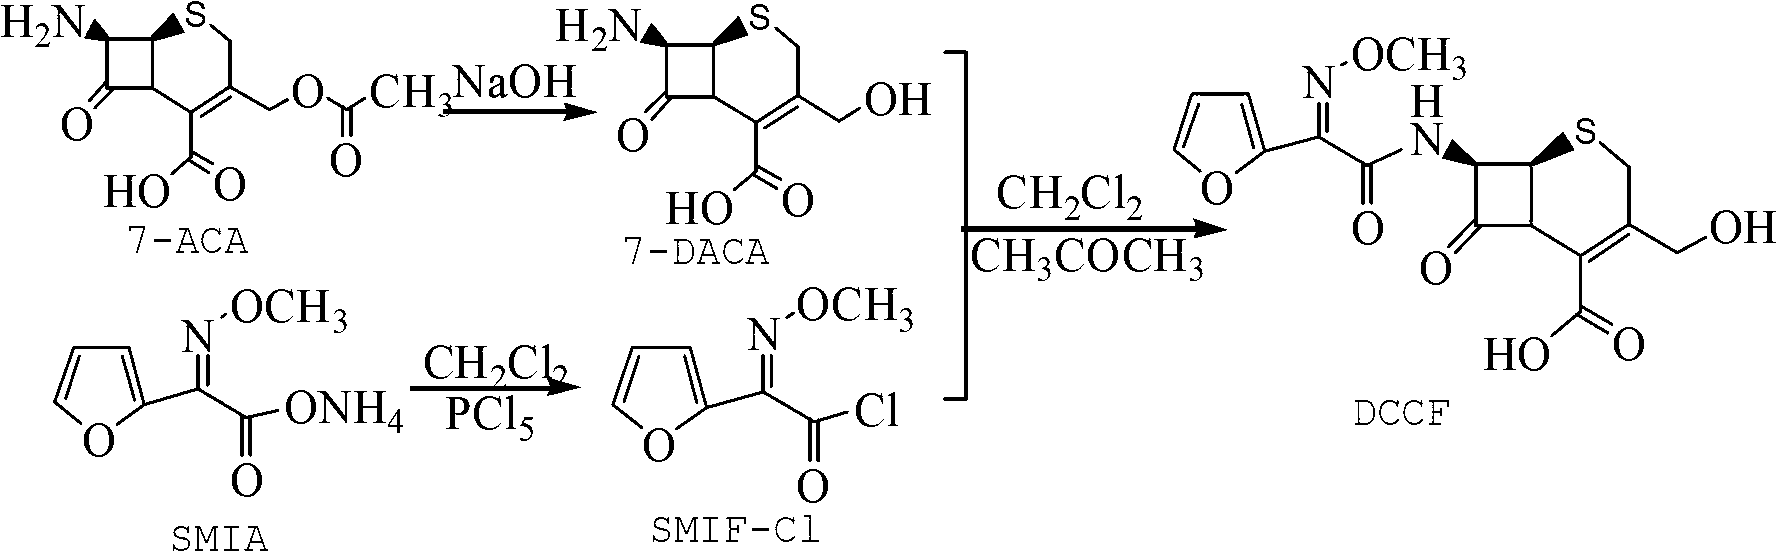 Method for preparing 3-descarbamoyl-cefuroxime acid